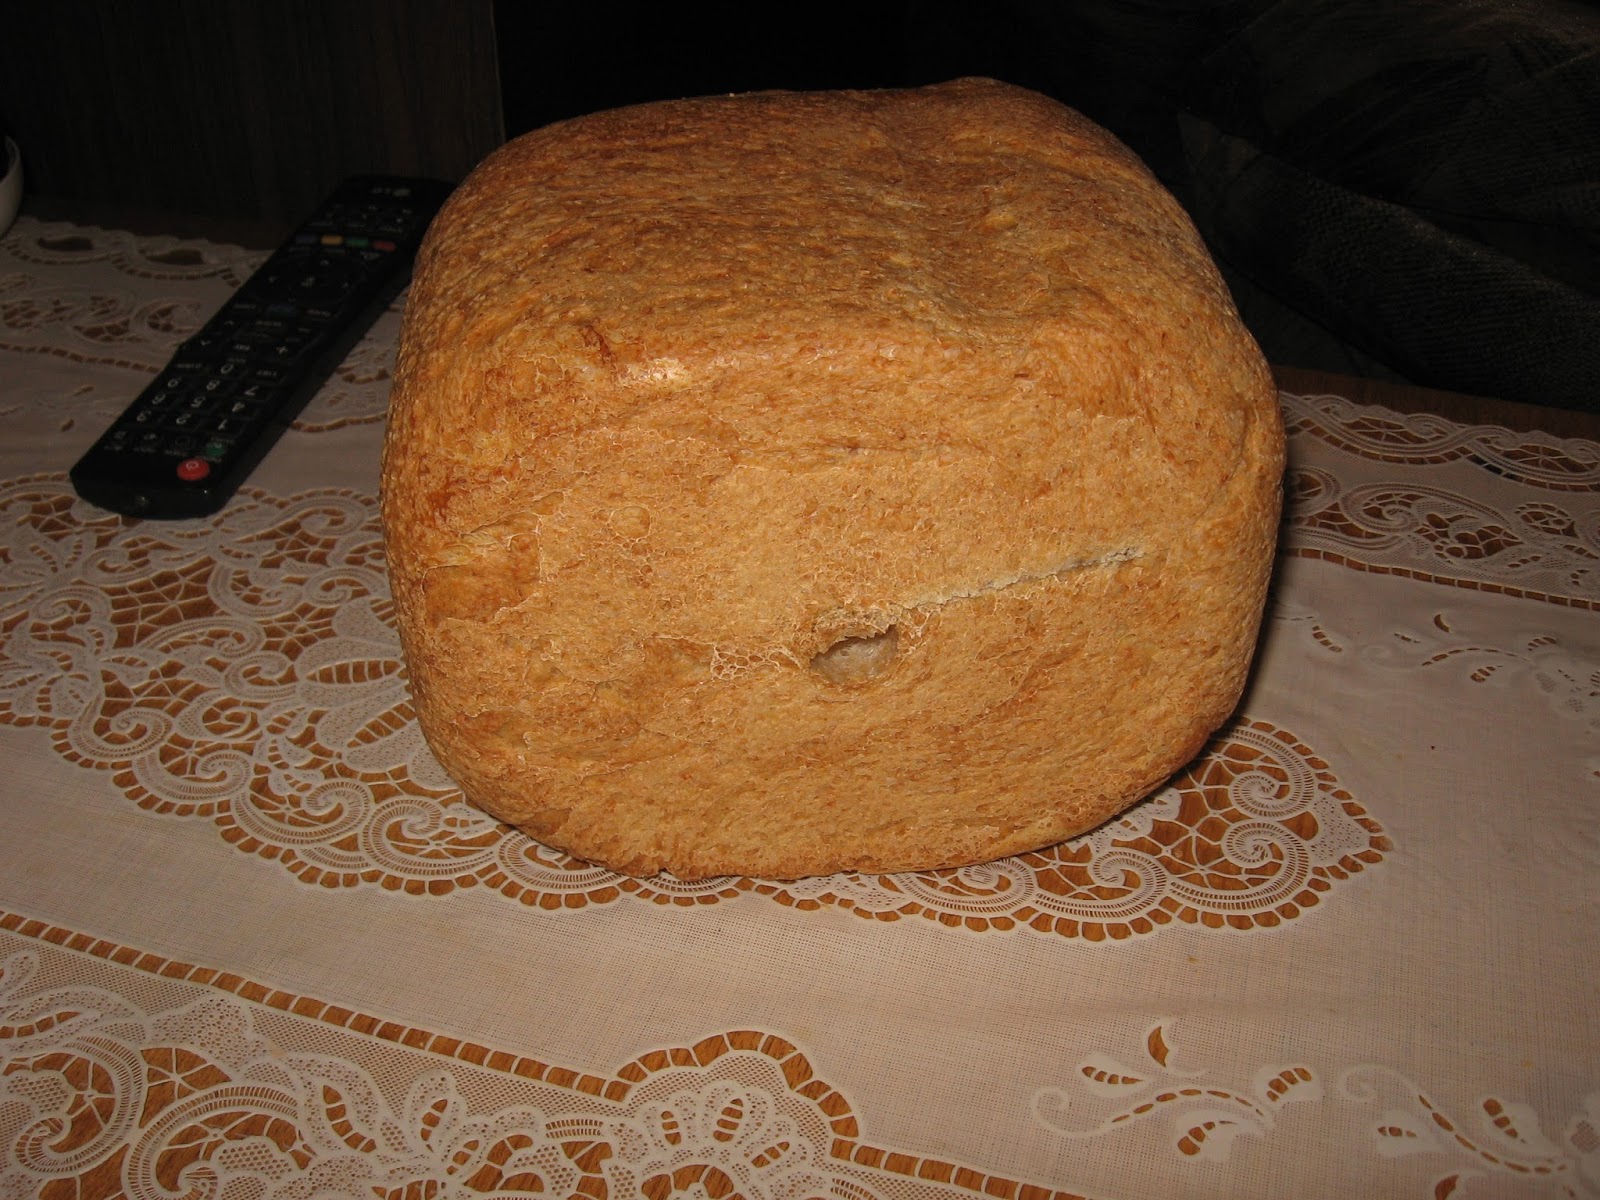 Рецепт хлеб panasonic. Хлеб Панасоник 2501. Хлеб в хлебопечке Панасоник 2501. Черный хлеб в хлебопечке Панасоник 2501. Panasonic CD-2501 бездрожжевой хлеб.